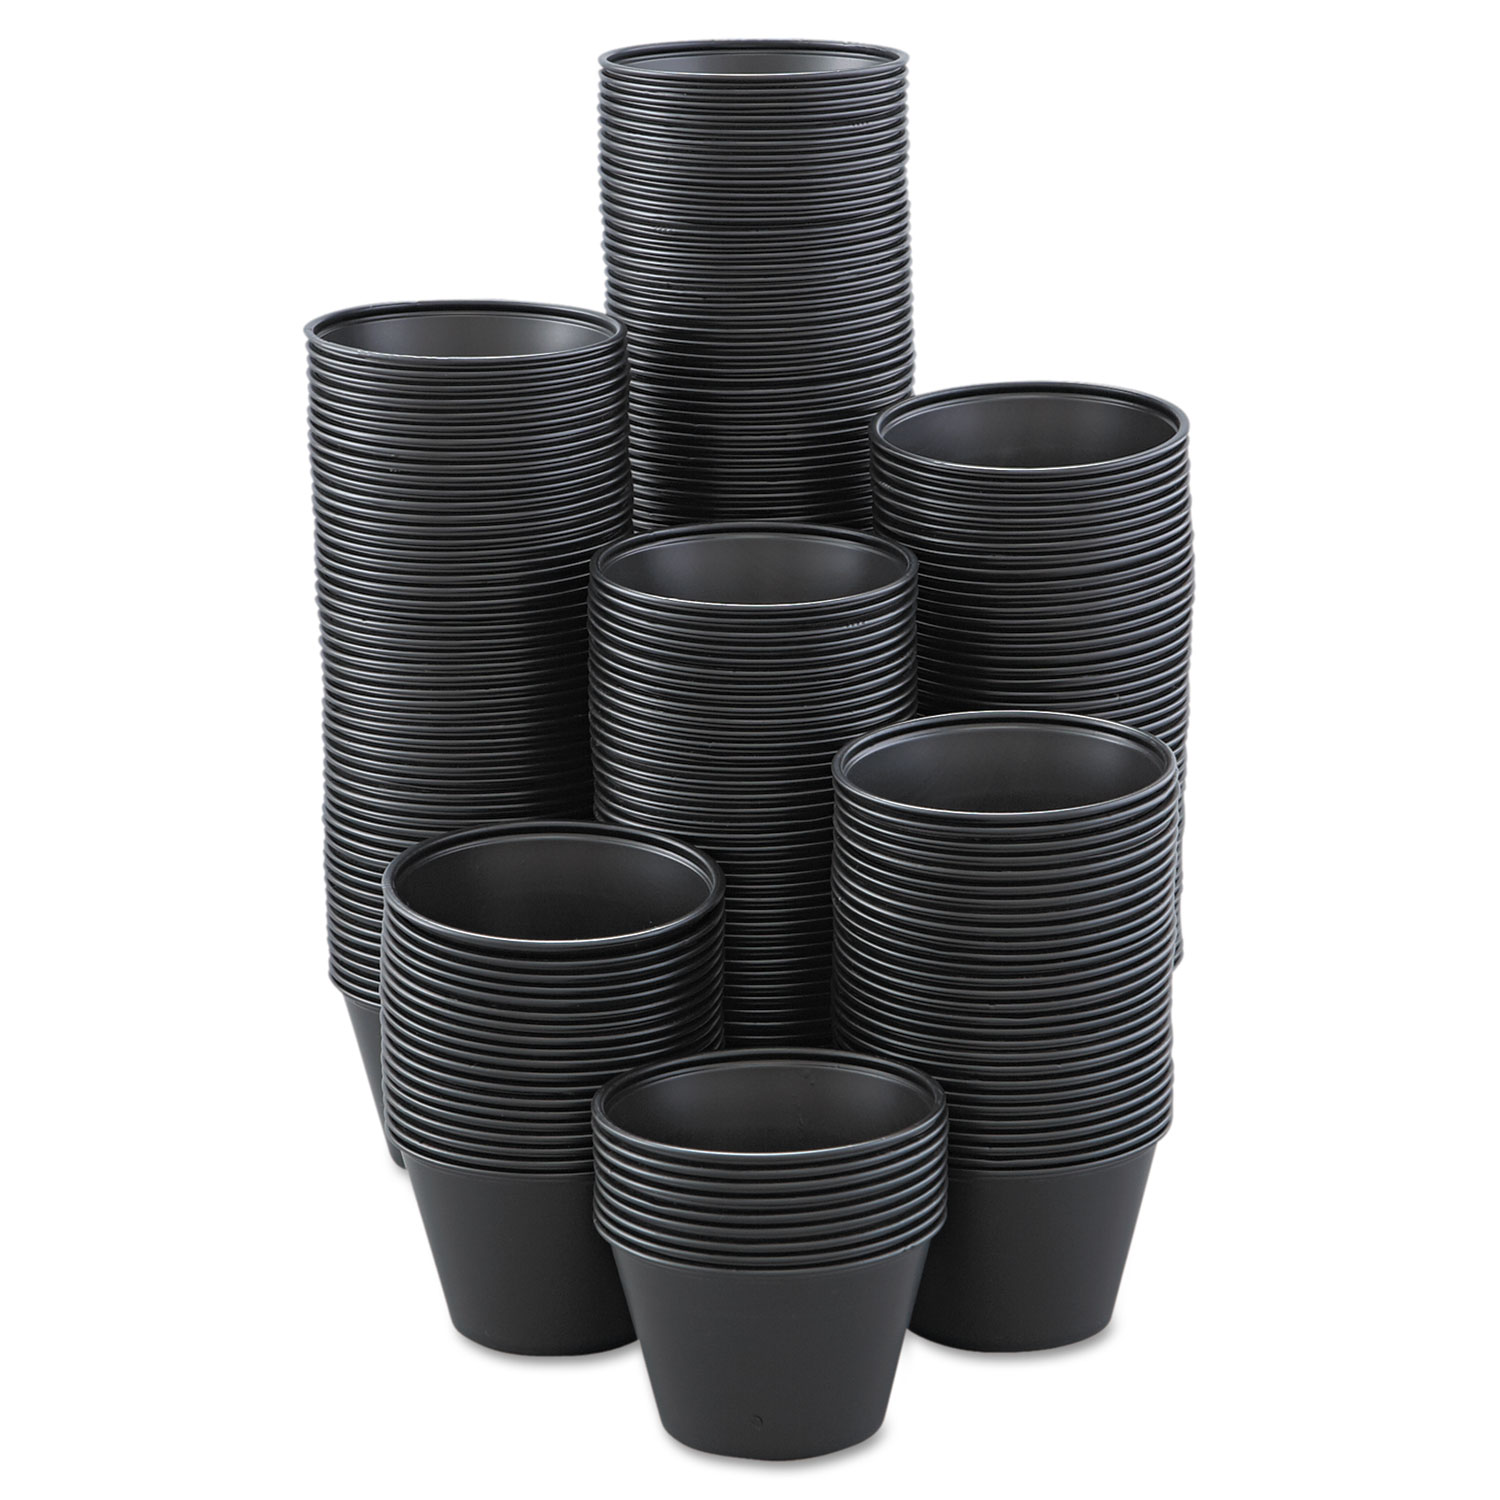 Polystyrene Portion Cups, 4oz, Black, 250/Bag, 10 Bags/Carton